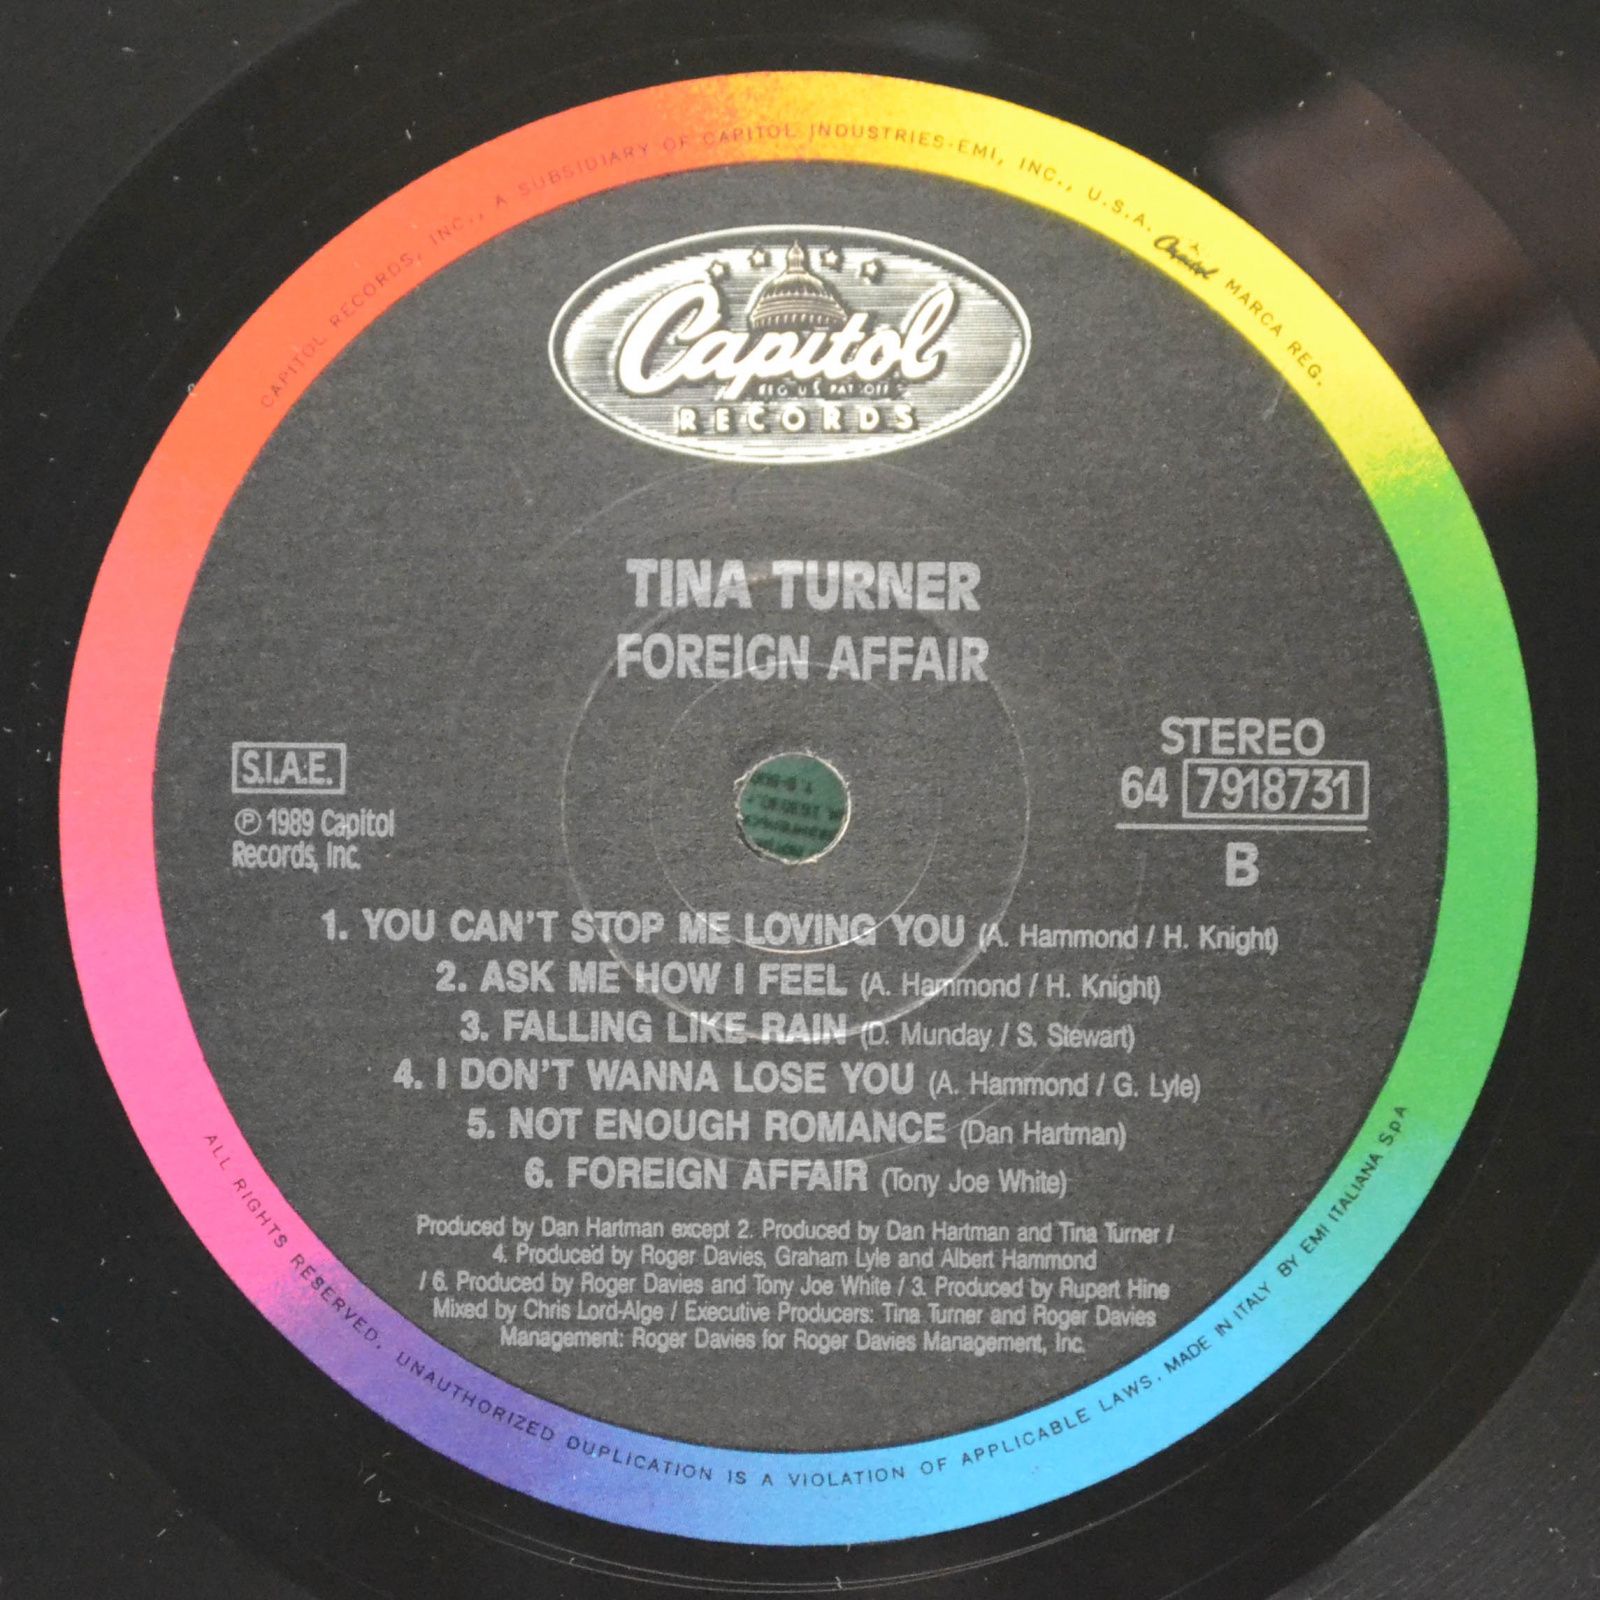 Tina Turner — Foreign Affair, 1989